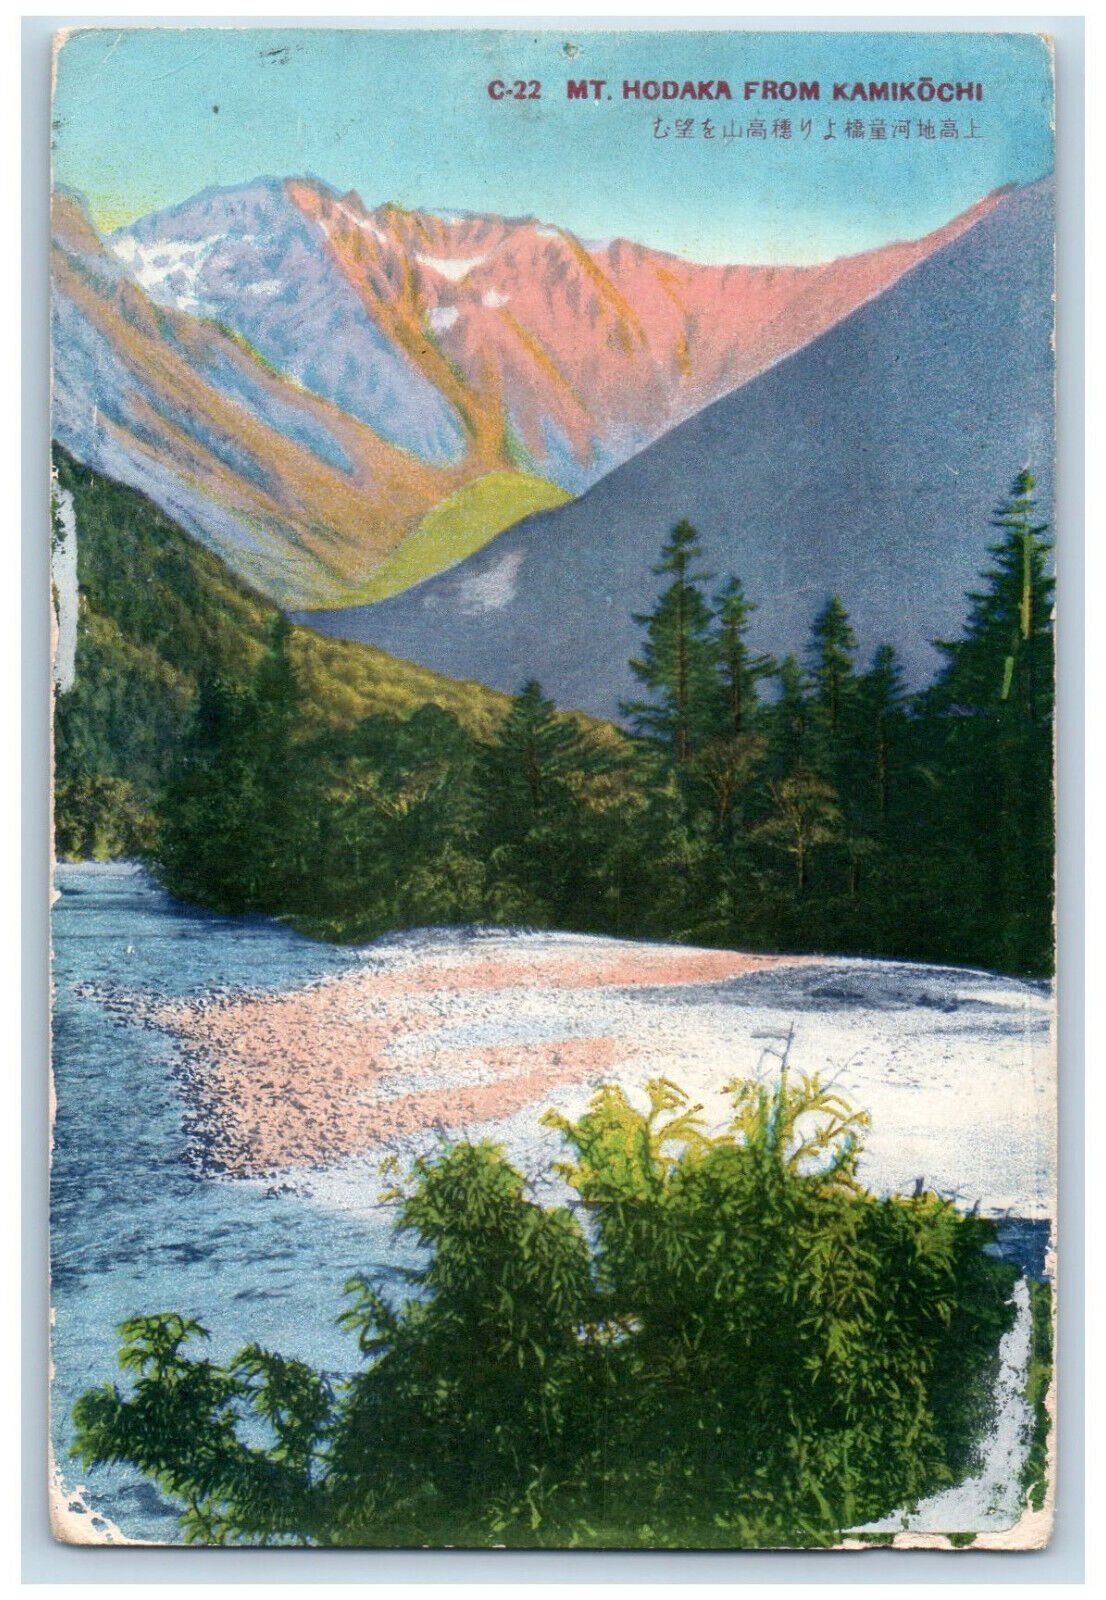 Nagano Japan Postcard Mt. Hodaka from Kamikochi c1950\'s Posted Vintage